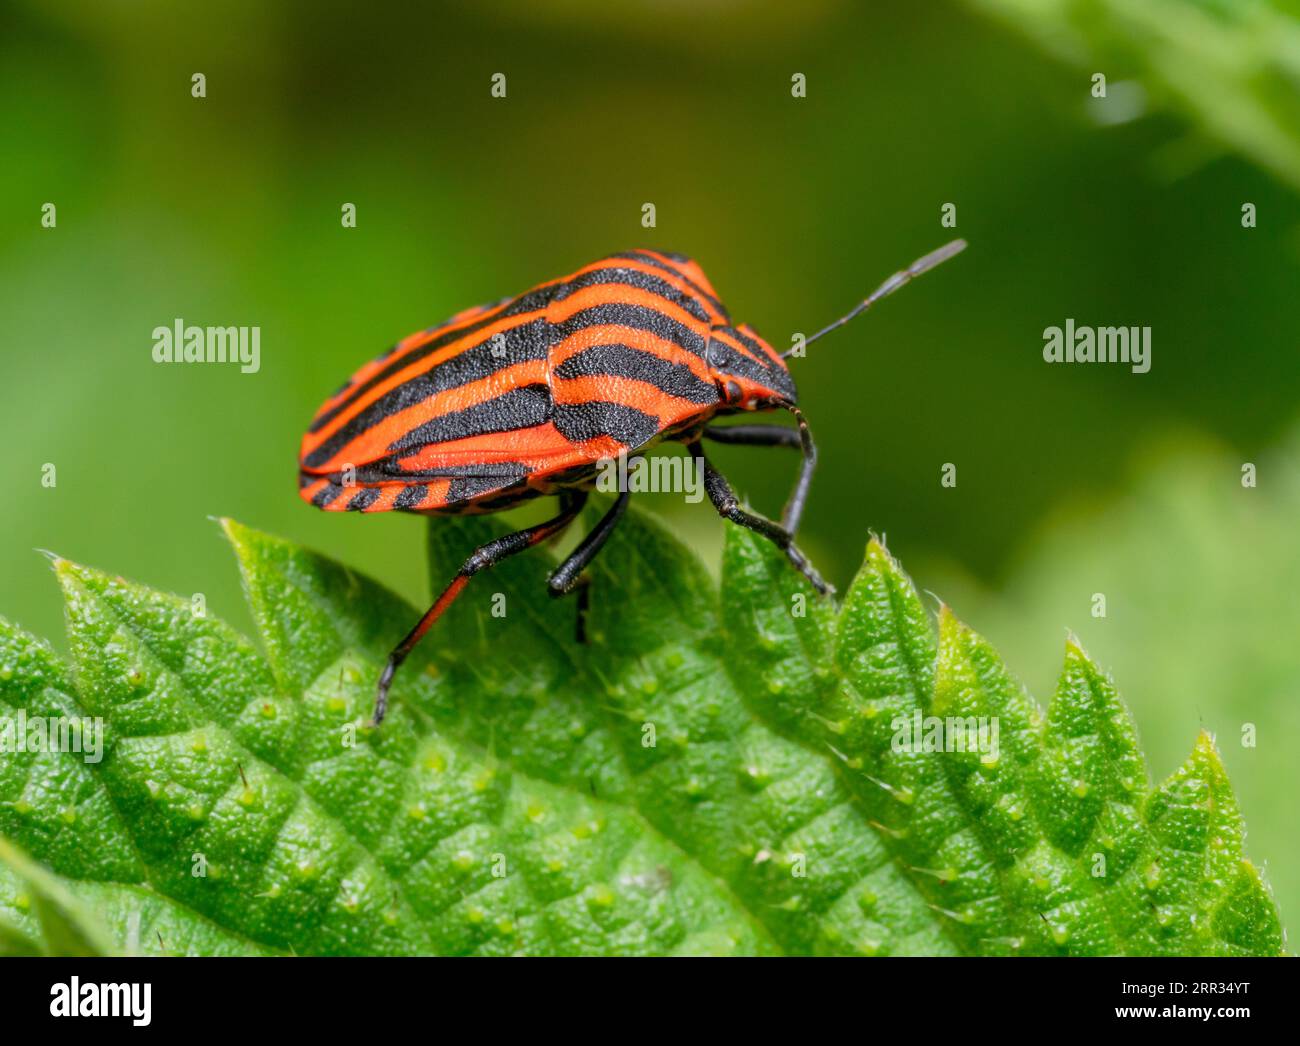 Sideways closeup shot of a Italian striped bug at the edge of a nettle leaf Stock Photo